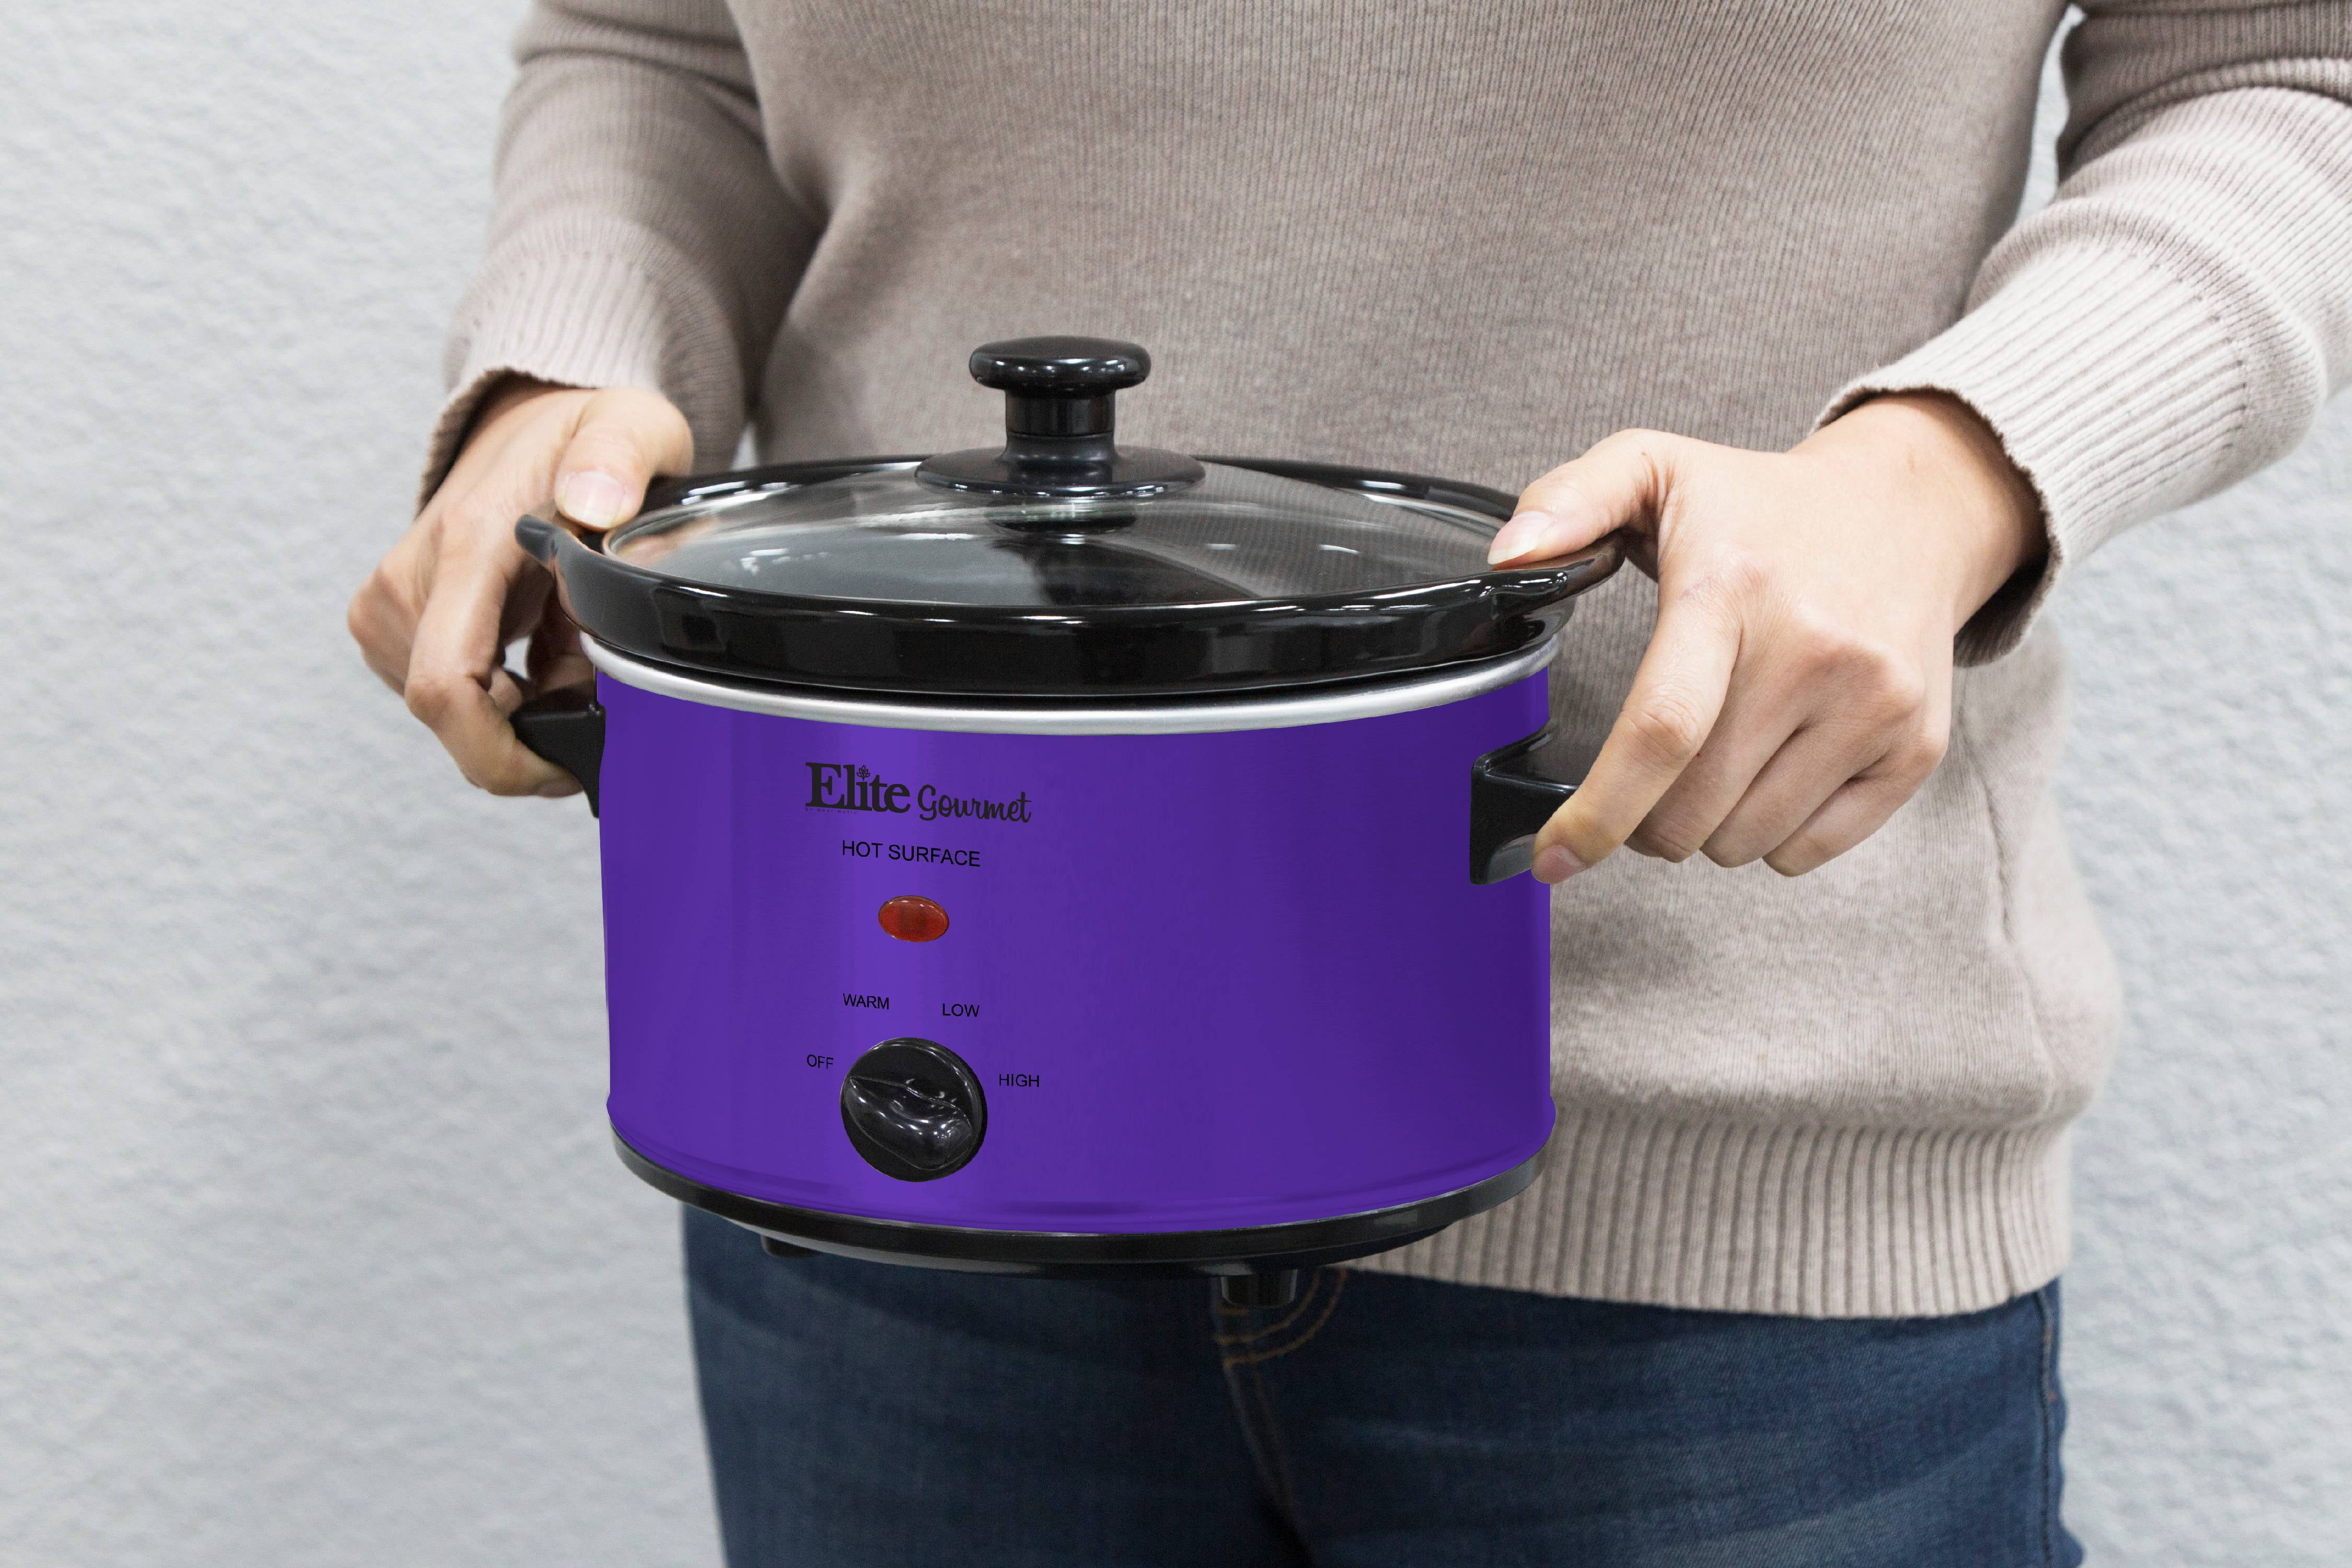 Nesco 1.5-Quart Purple Oval Slow Cooker at